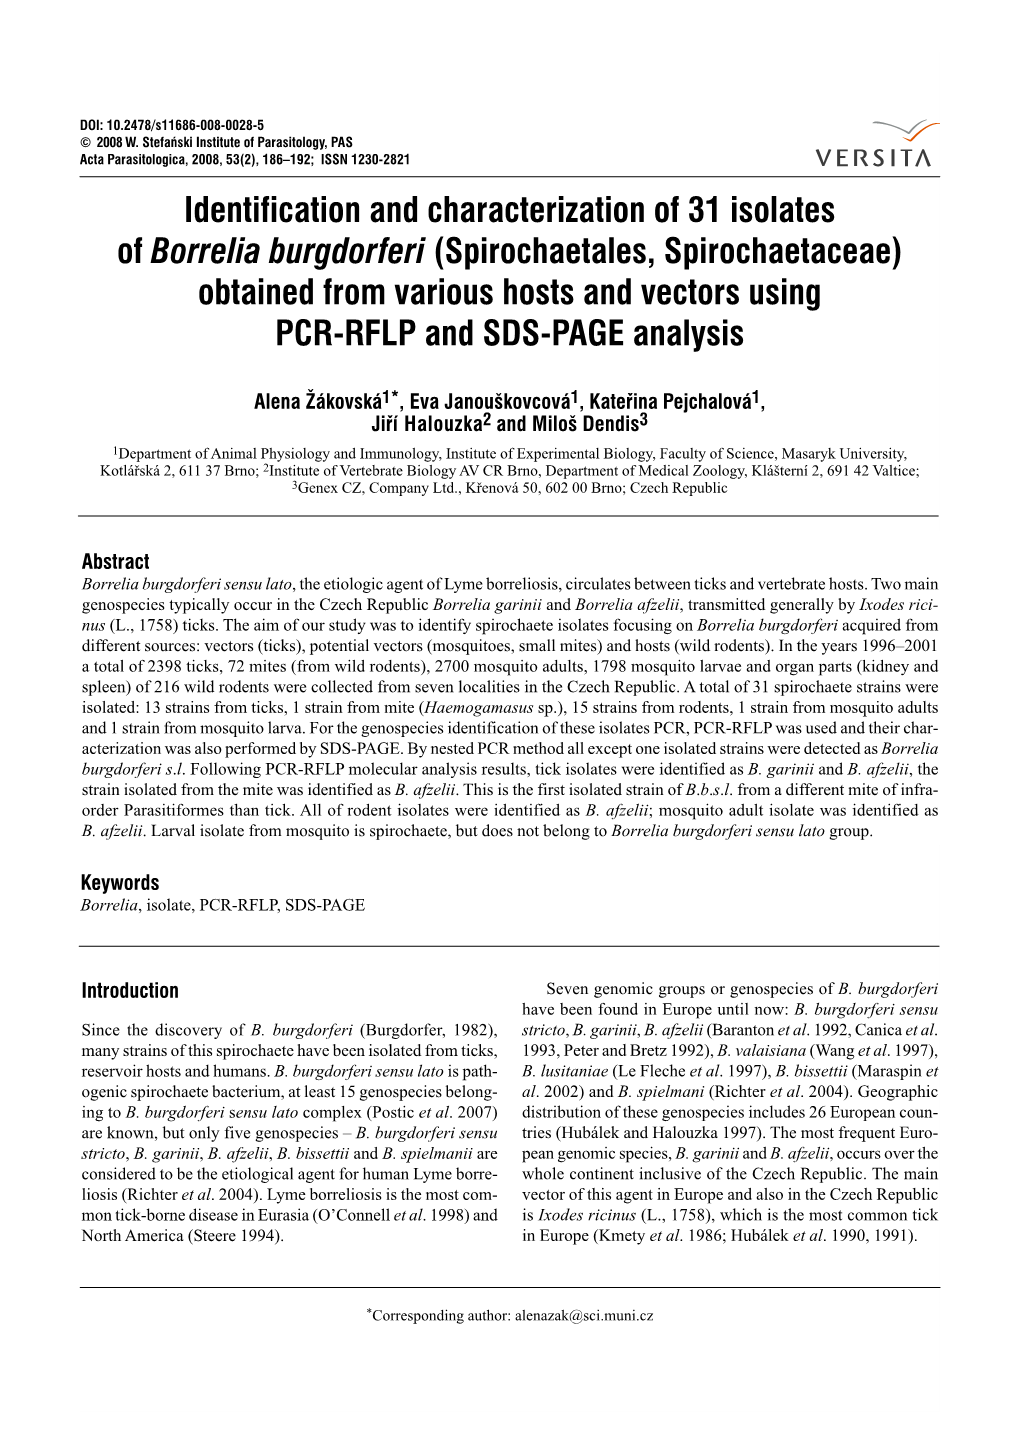 Identification and Characterization of 31 Isolates of Borrelia Burgdorferi